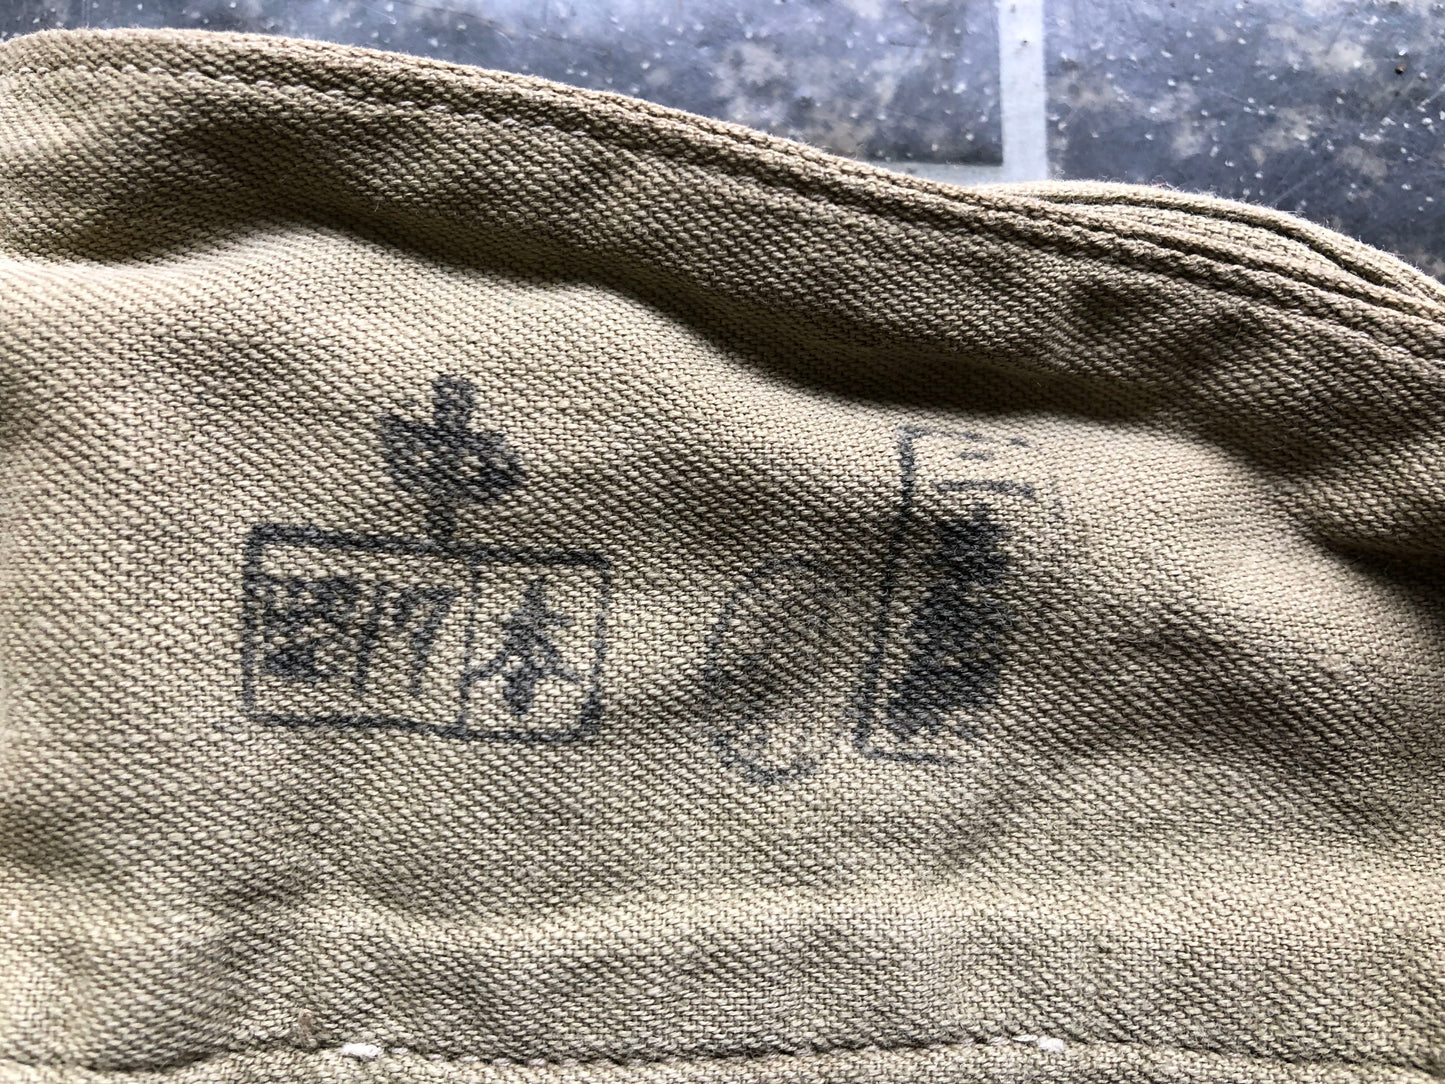 Y5295 Imperial Japan Army Military uniform top bottom set Japan WW2 vintage